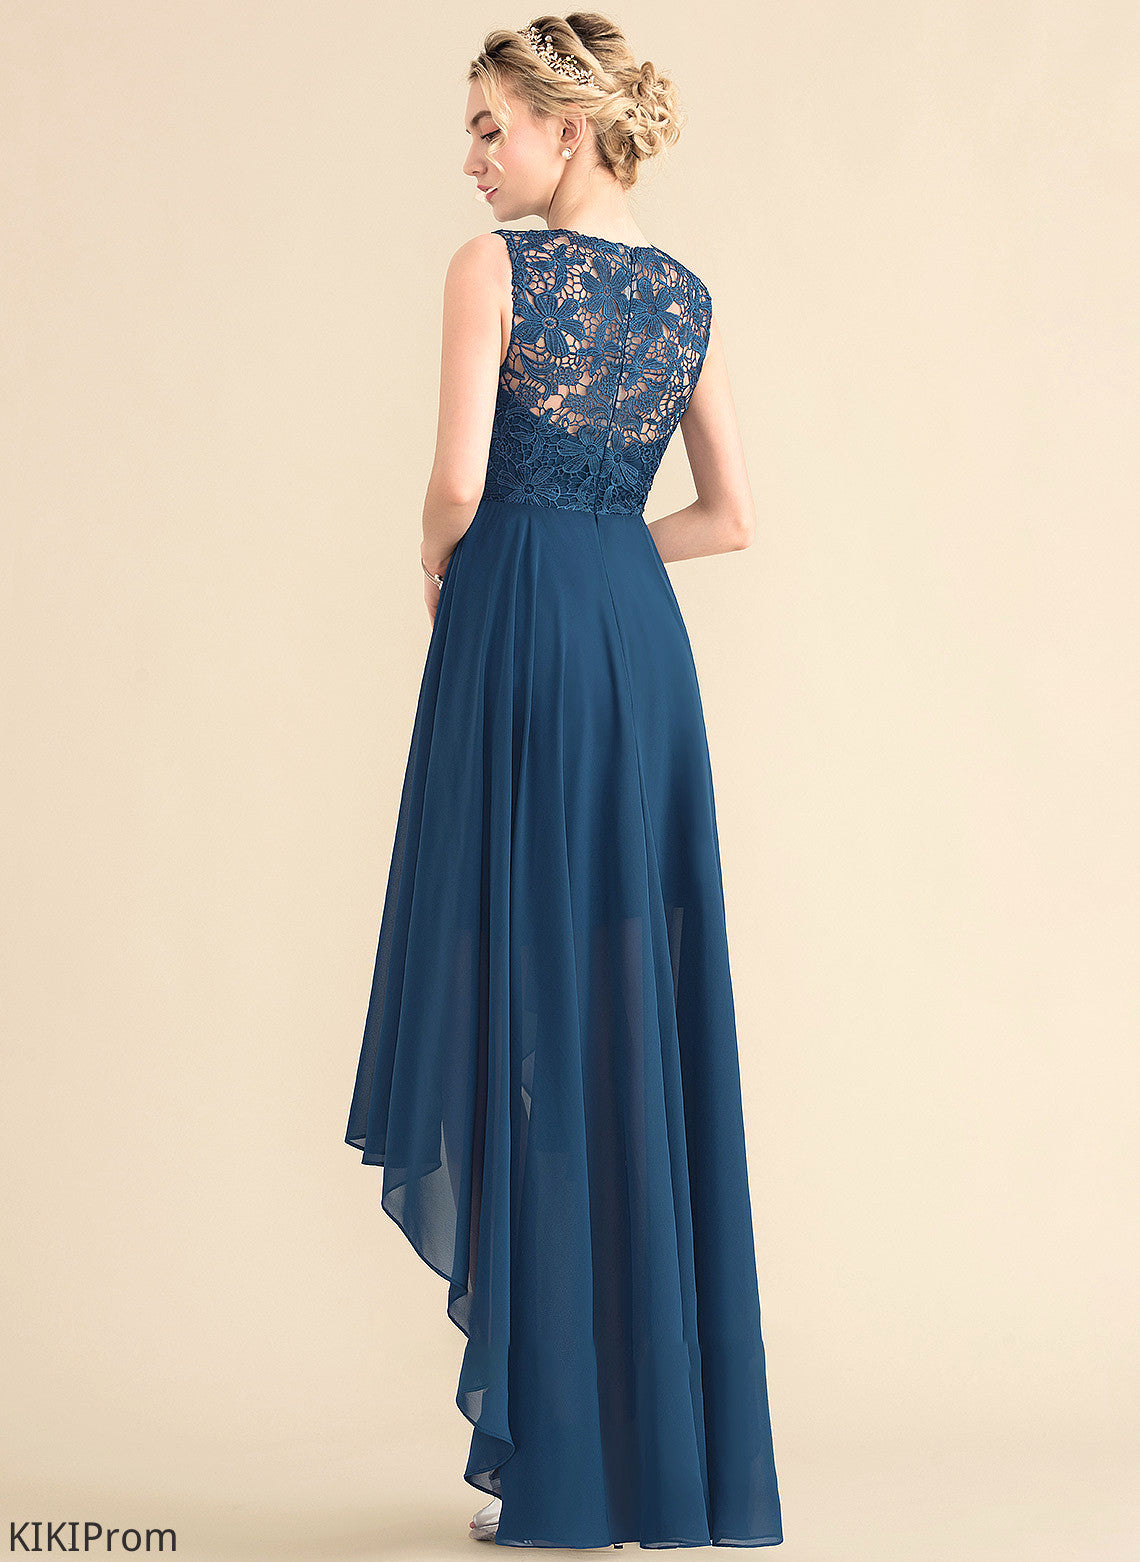 Fabric Neckline Asymmetrical Lace A-Line Straps ScoopNeck Silhouette Length Marely Sheath/Column Natural Waist Bridesmaid Dresses